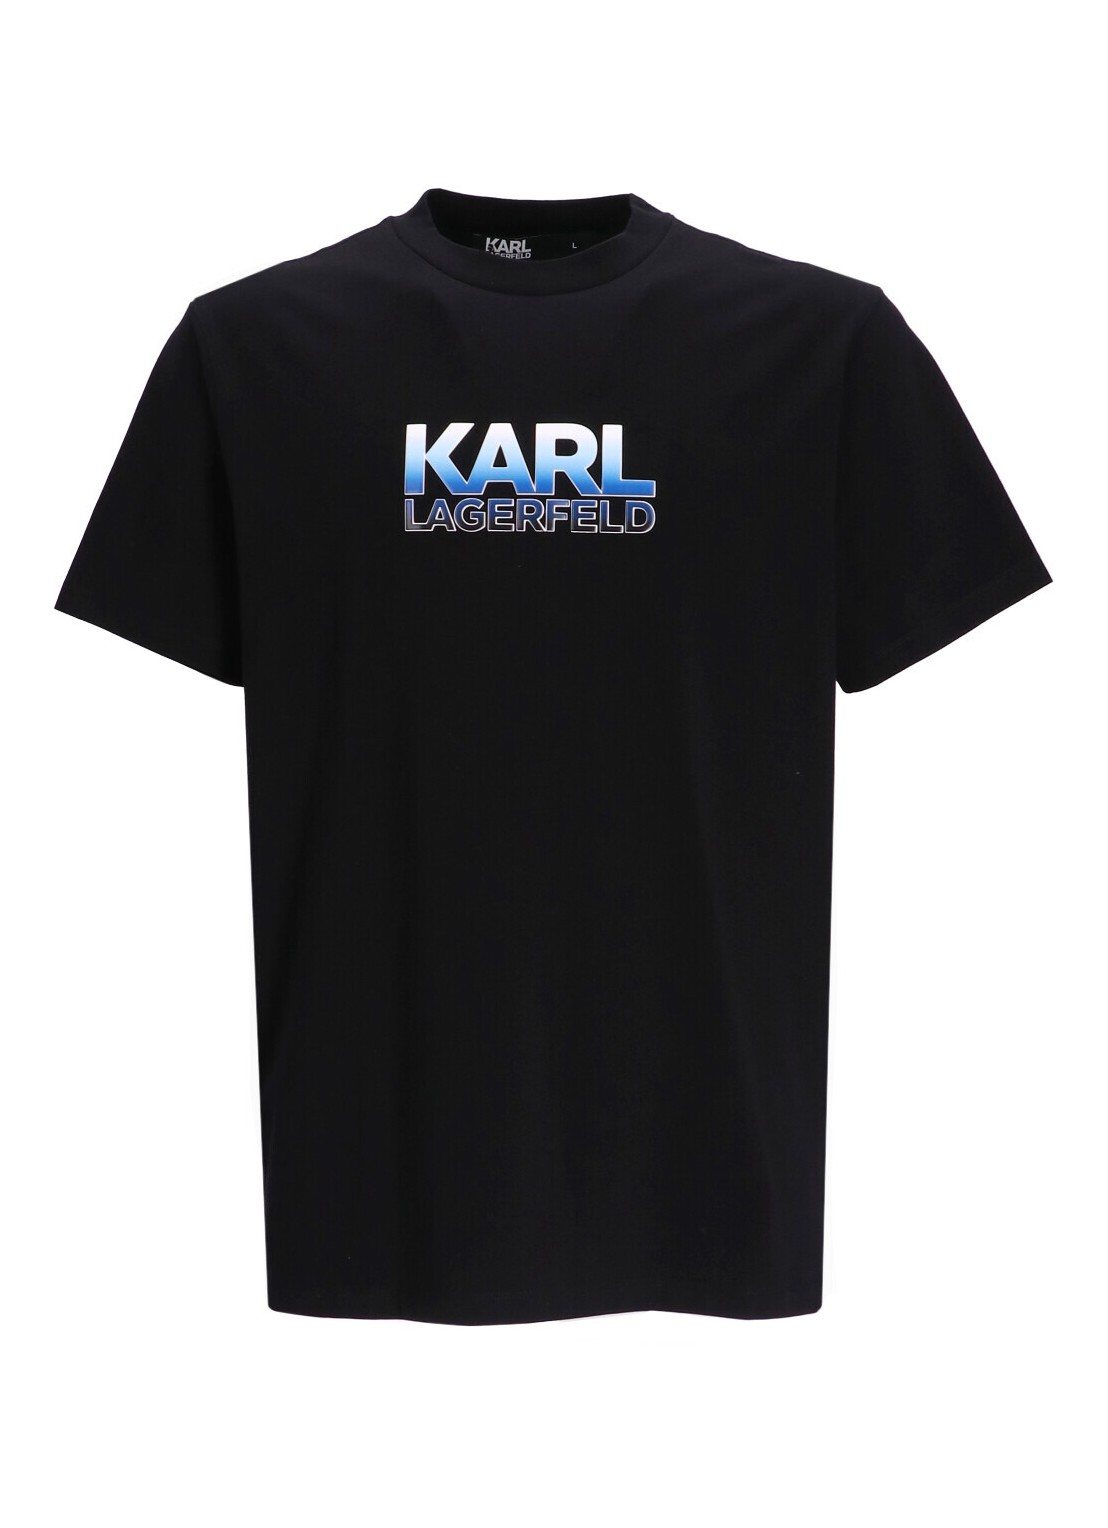 Camiseta karl lagerfeld t-shirt man t-shirt crewneck 755402541221 990 talla XL
 